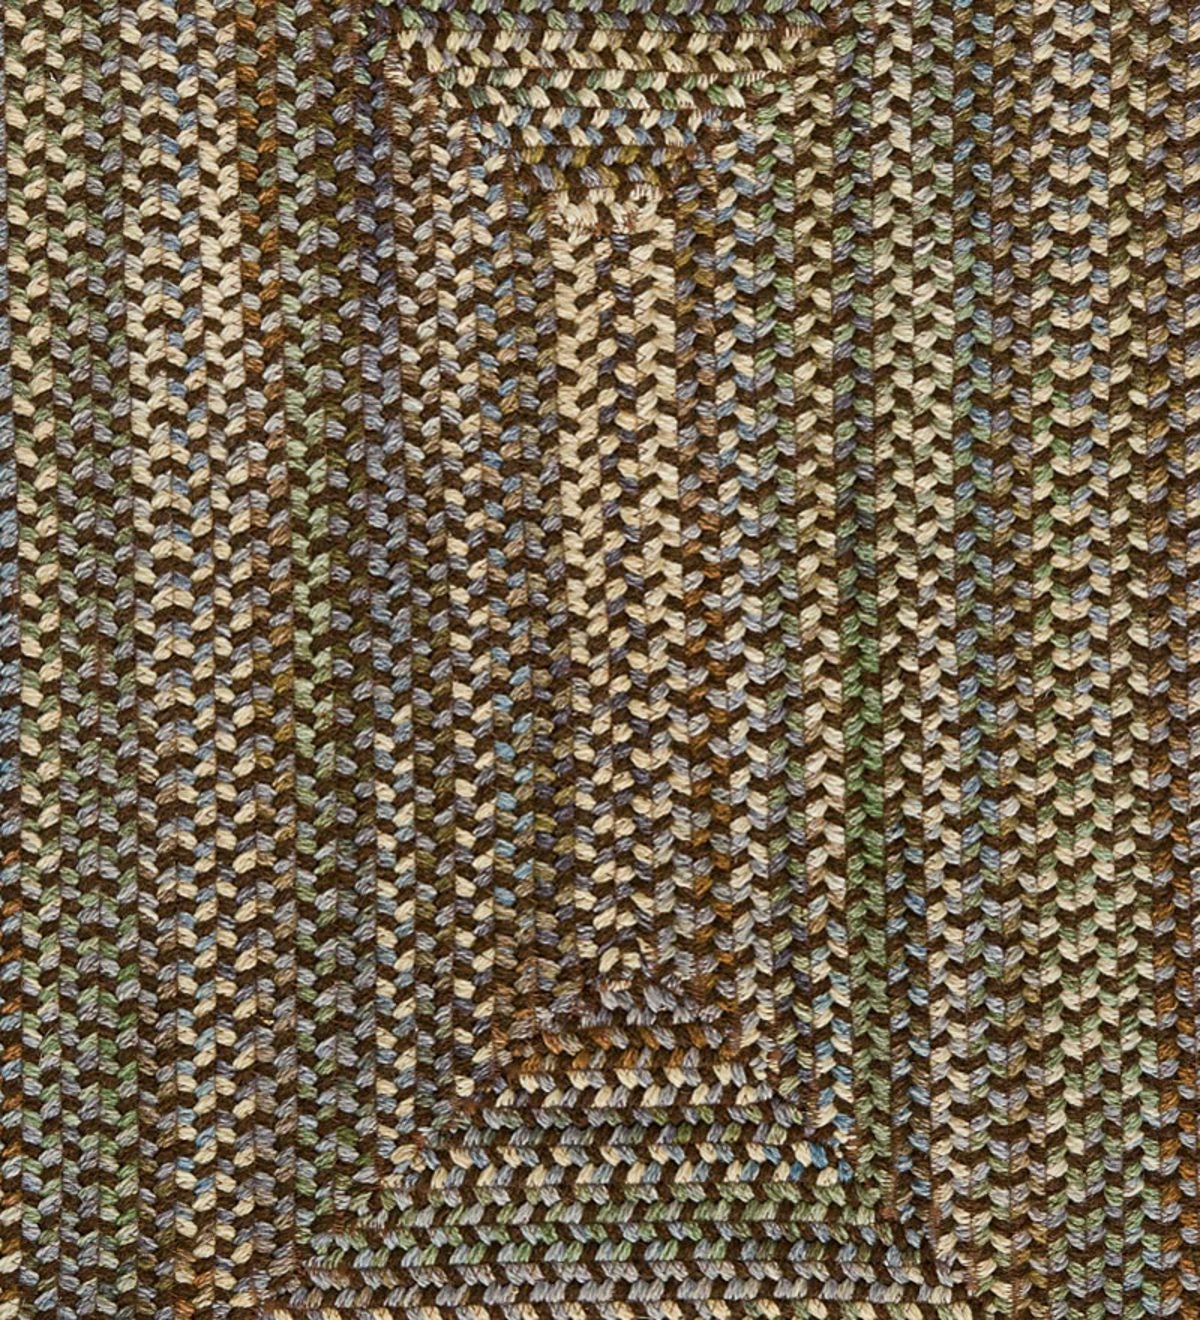 Bear Creek Rectangular Braided Wool Blend Rug, 5' x 8' - Chocolate Multi